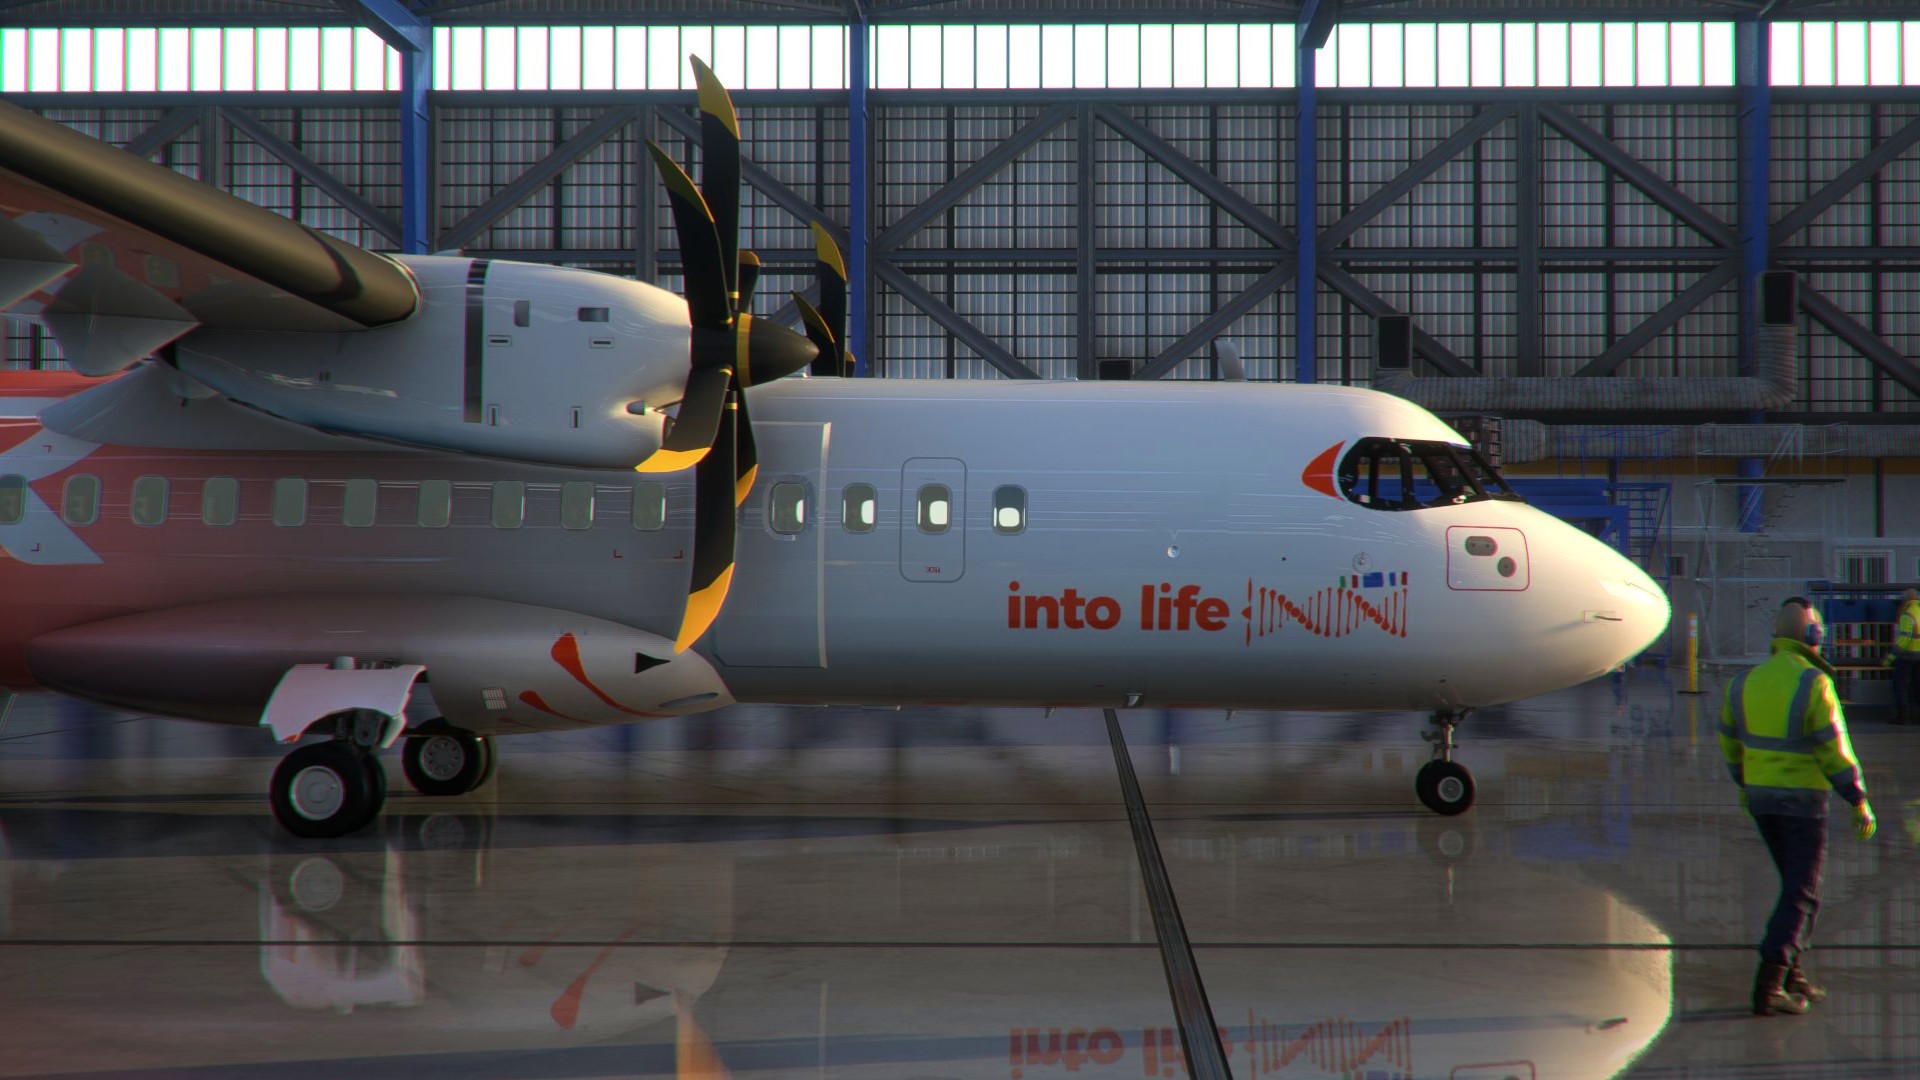 Microsoft Flight Simulator is getting the ATR 42600 turboprop airliner